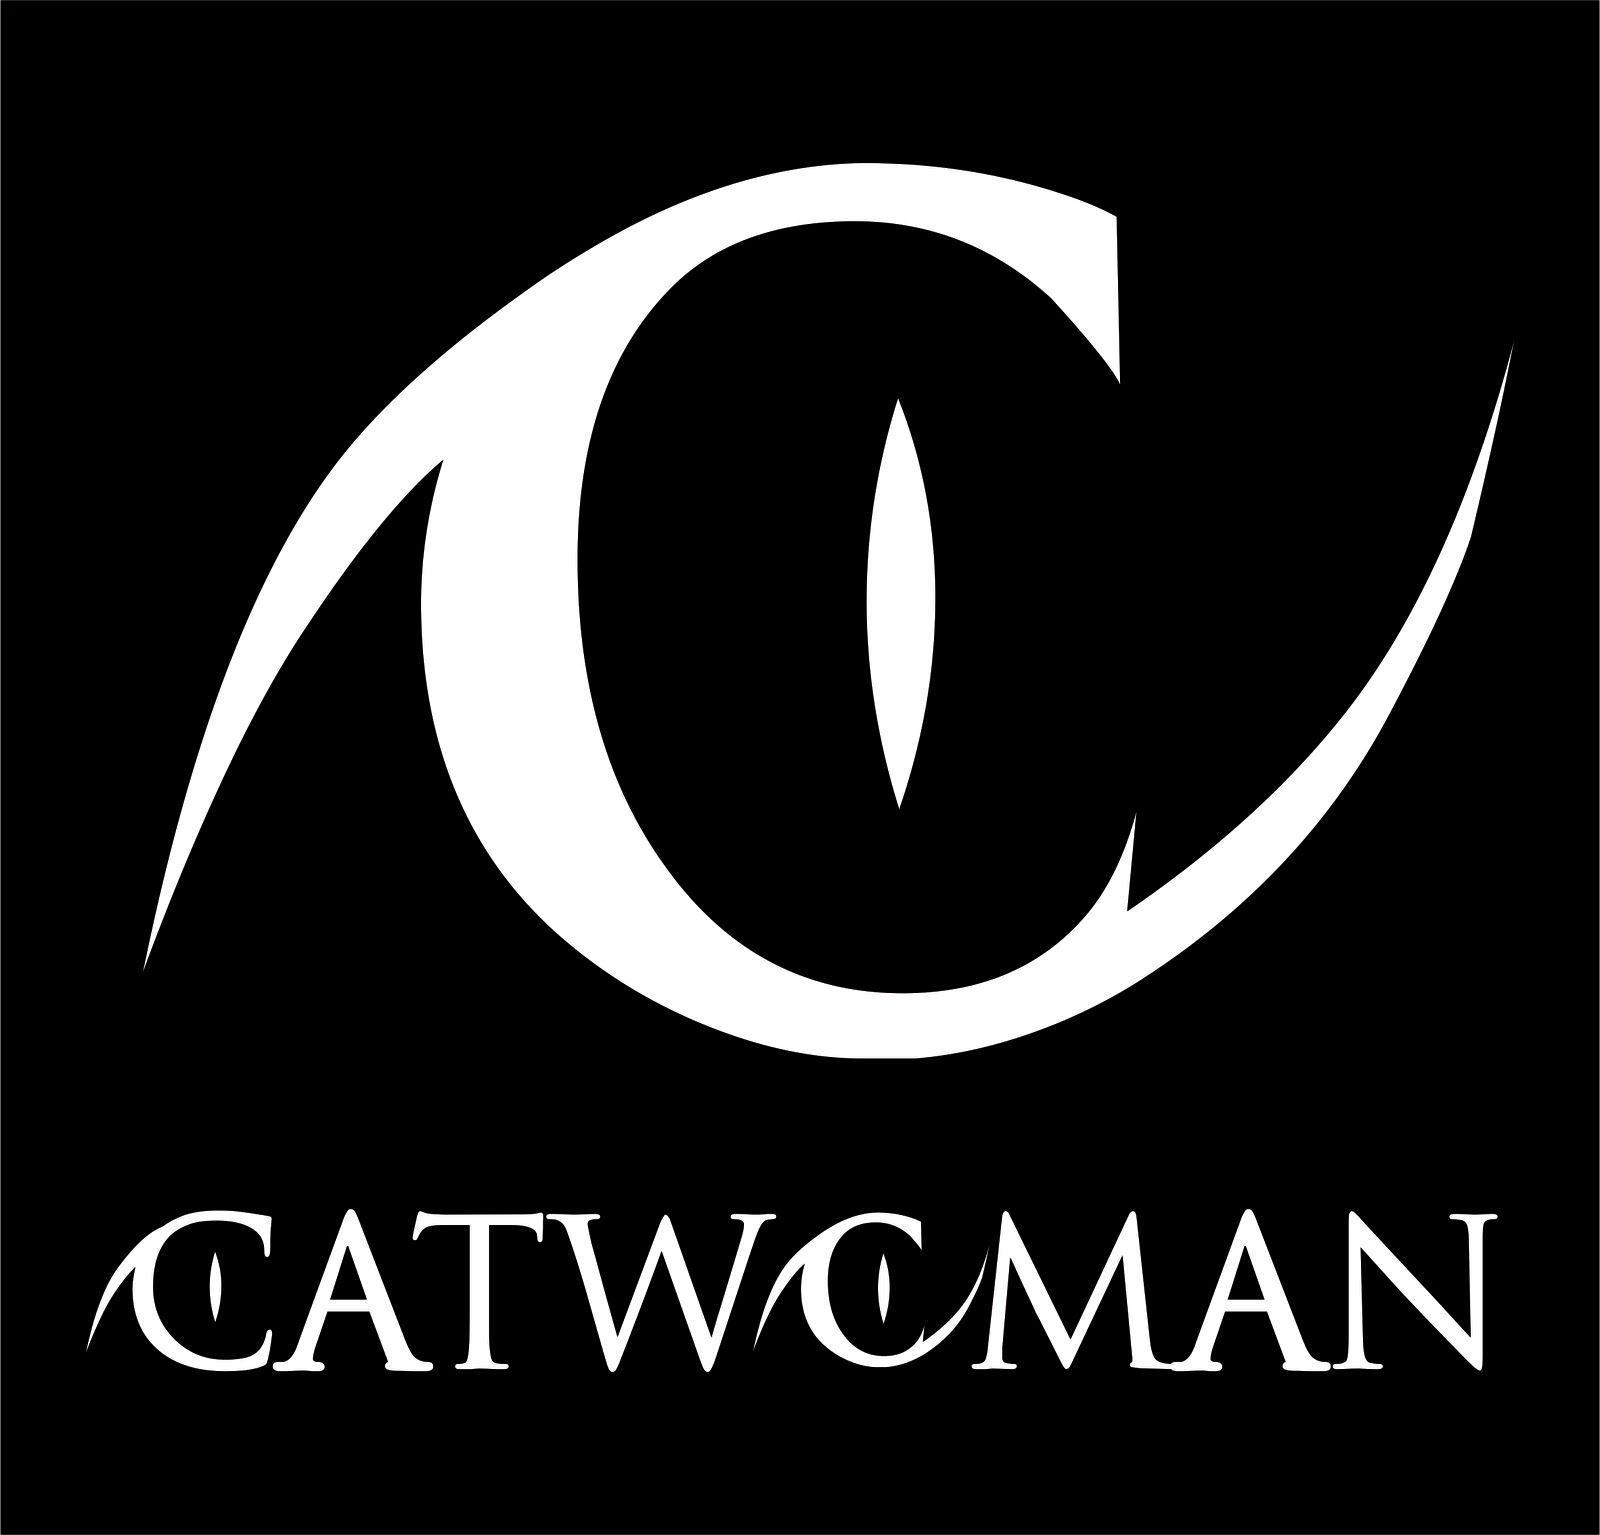 Catwoman Logo - Catwoman logo | Ideas | Catwoman, Catwoman cosplay, Batman, catwoman